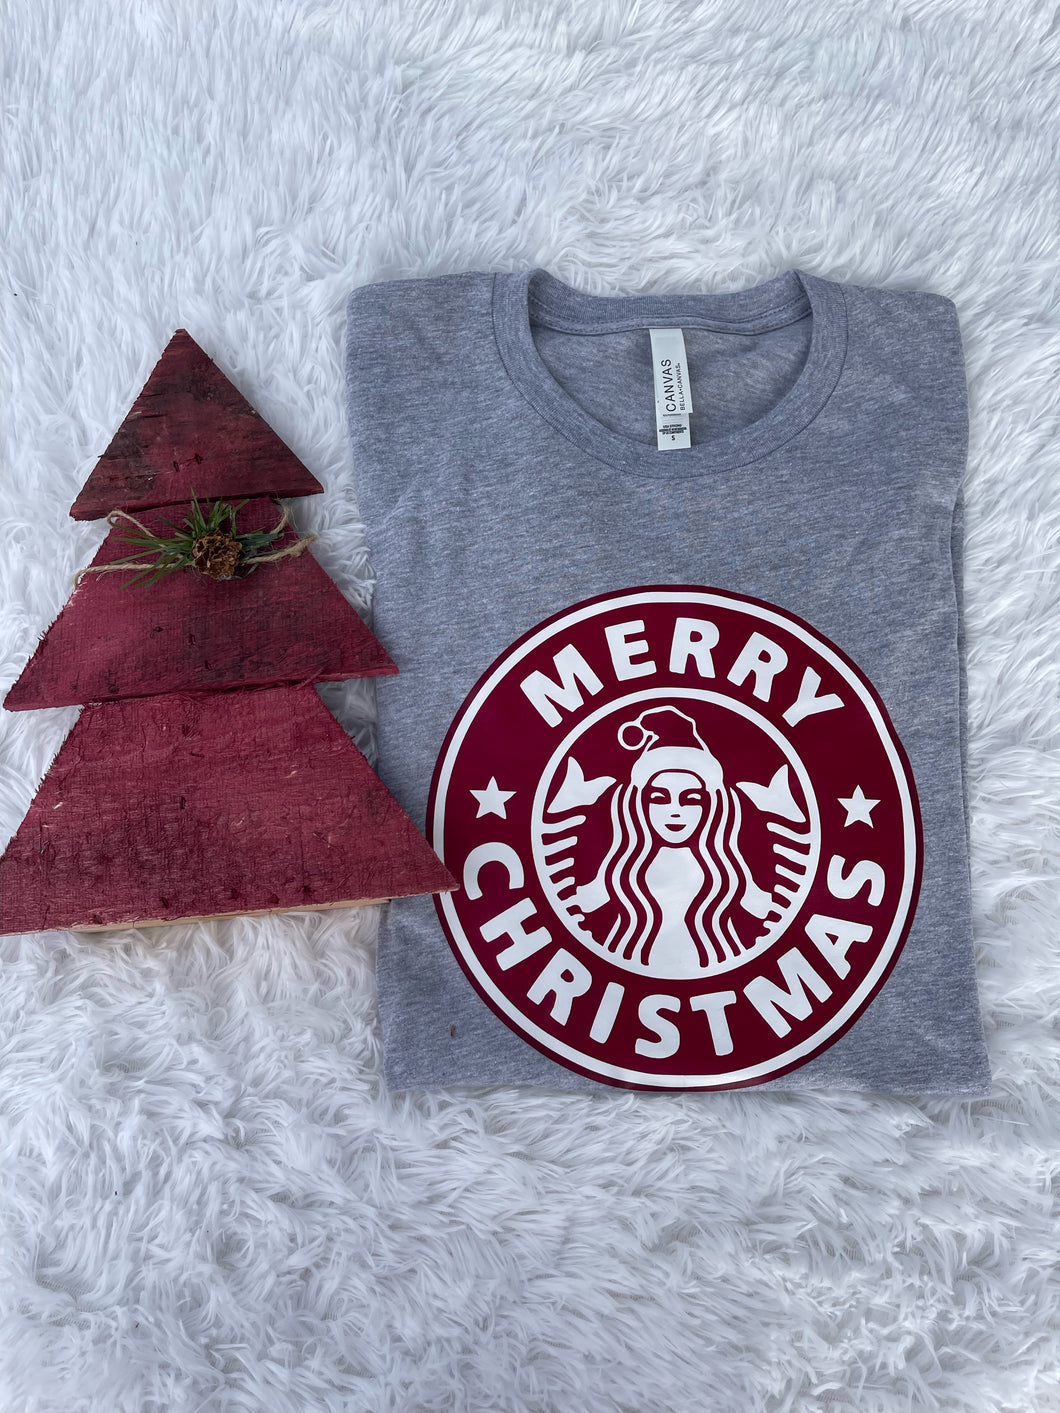 Christmas Starbucks shirt